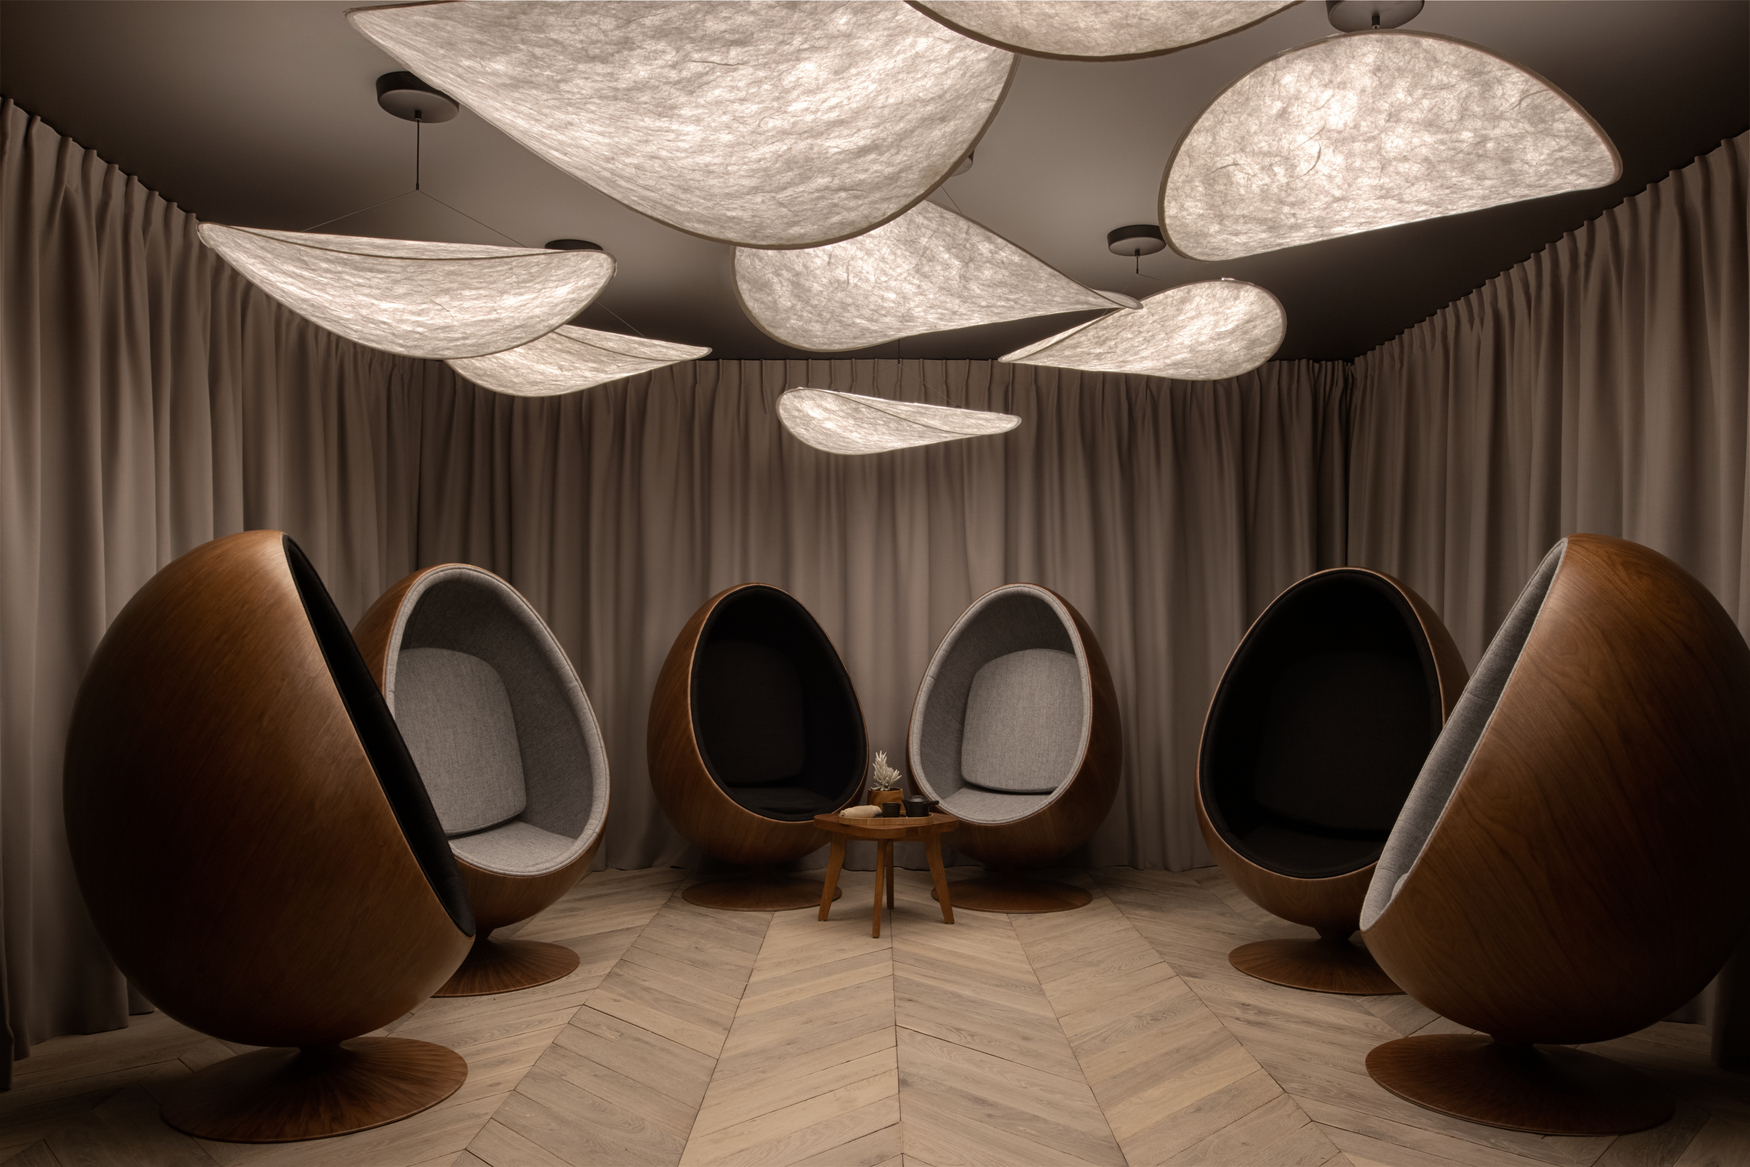 Six Senses Crans-Montana 的 SPA 中心休息室，特別採用了造型可愛的蛋形椅。